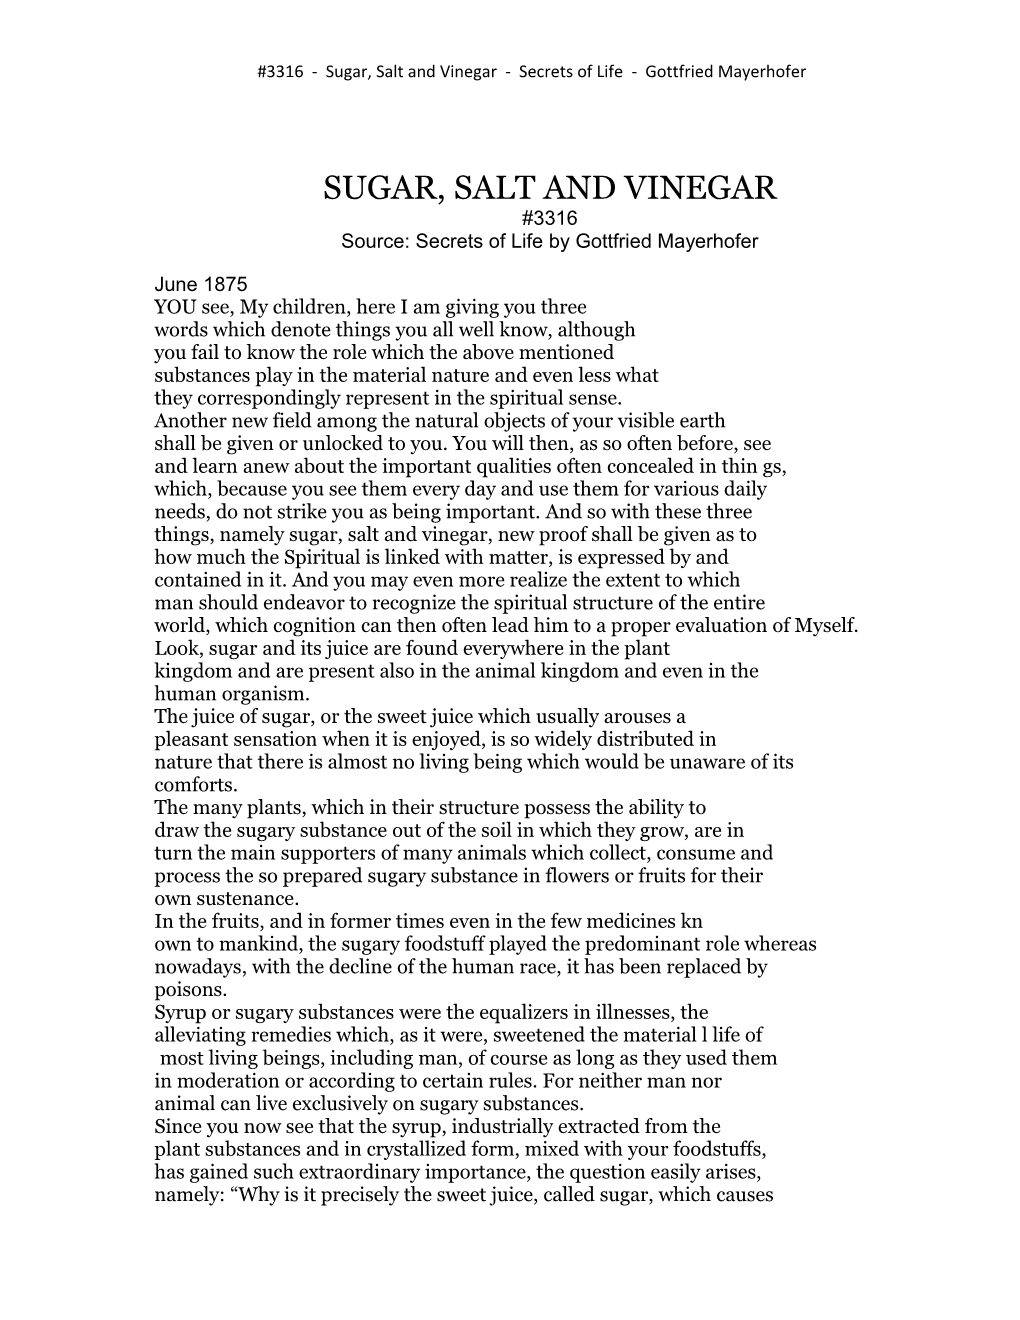 3316 - Sugar, Salt and Vinegar - Secrets of Life - Gottfried Mayerhofer